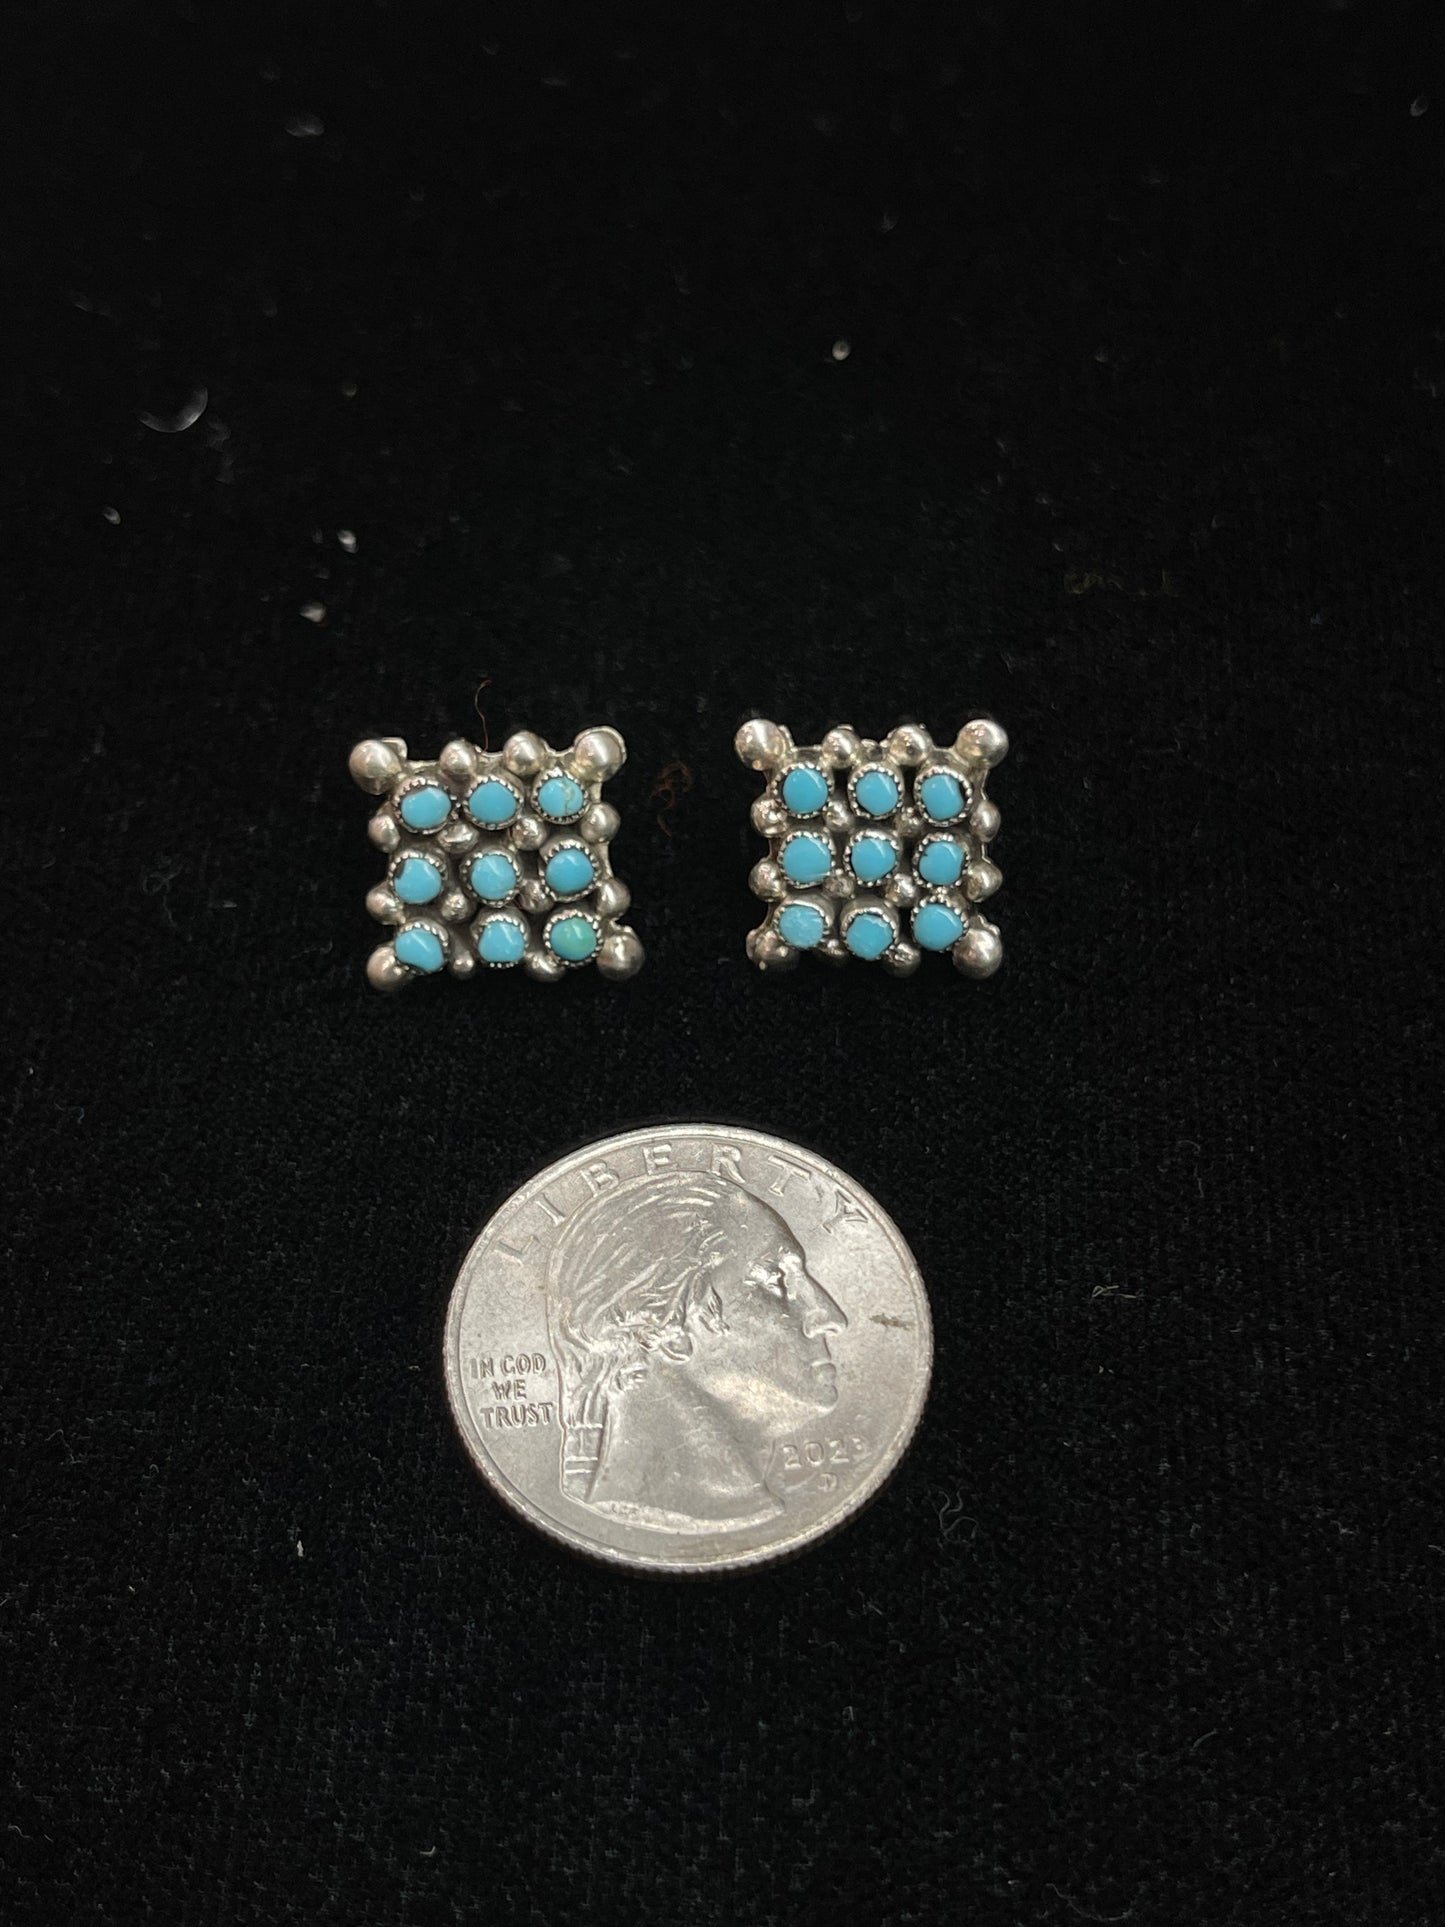 Post Earrings with Multiple Sleeping Beauty Turquoise Stones